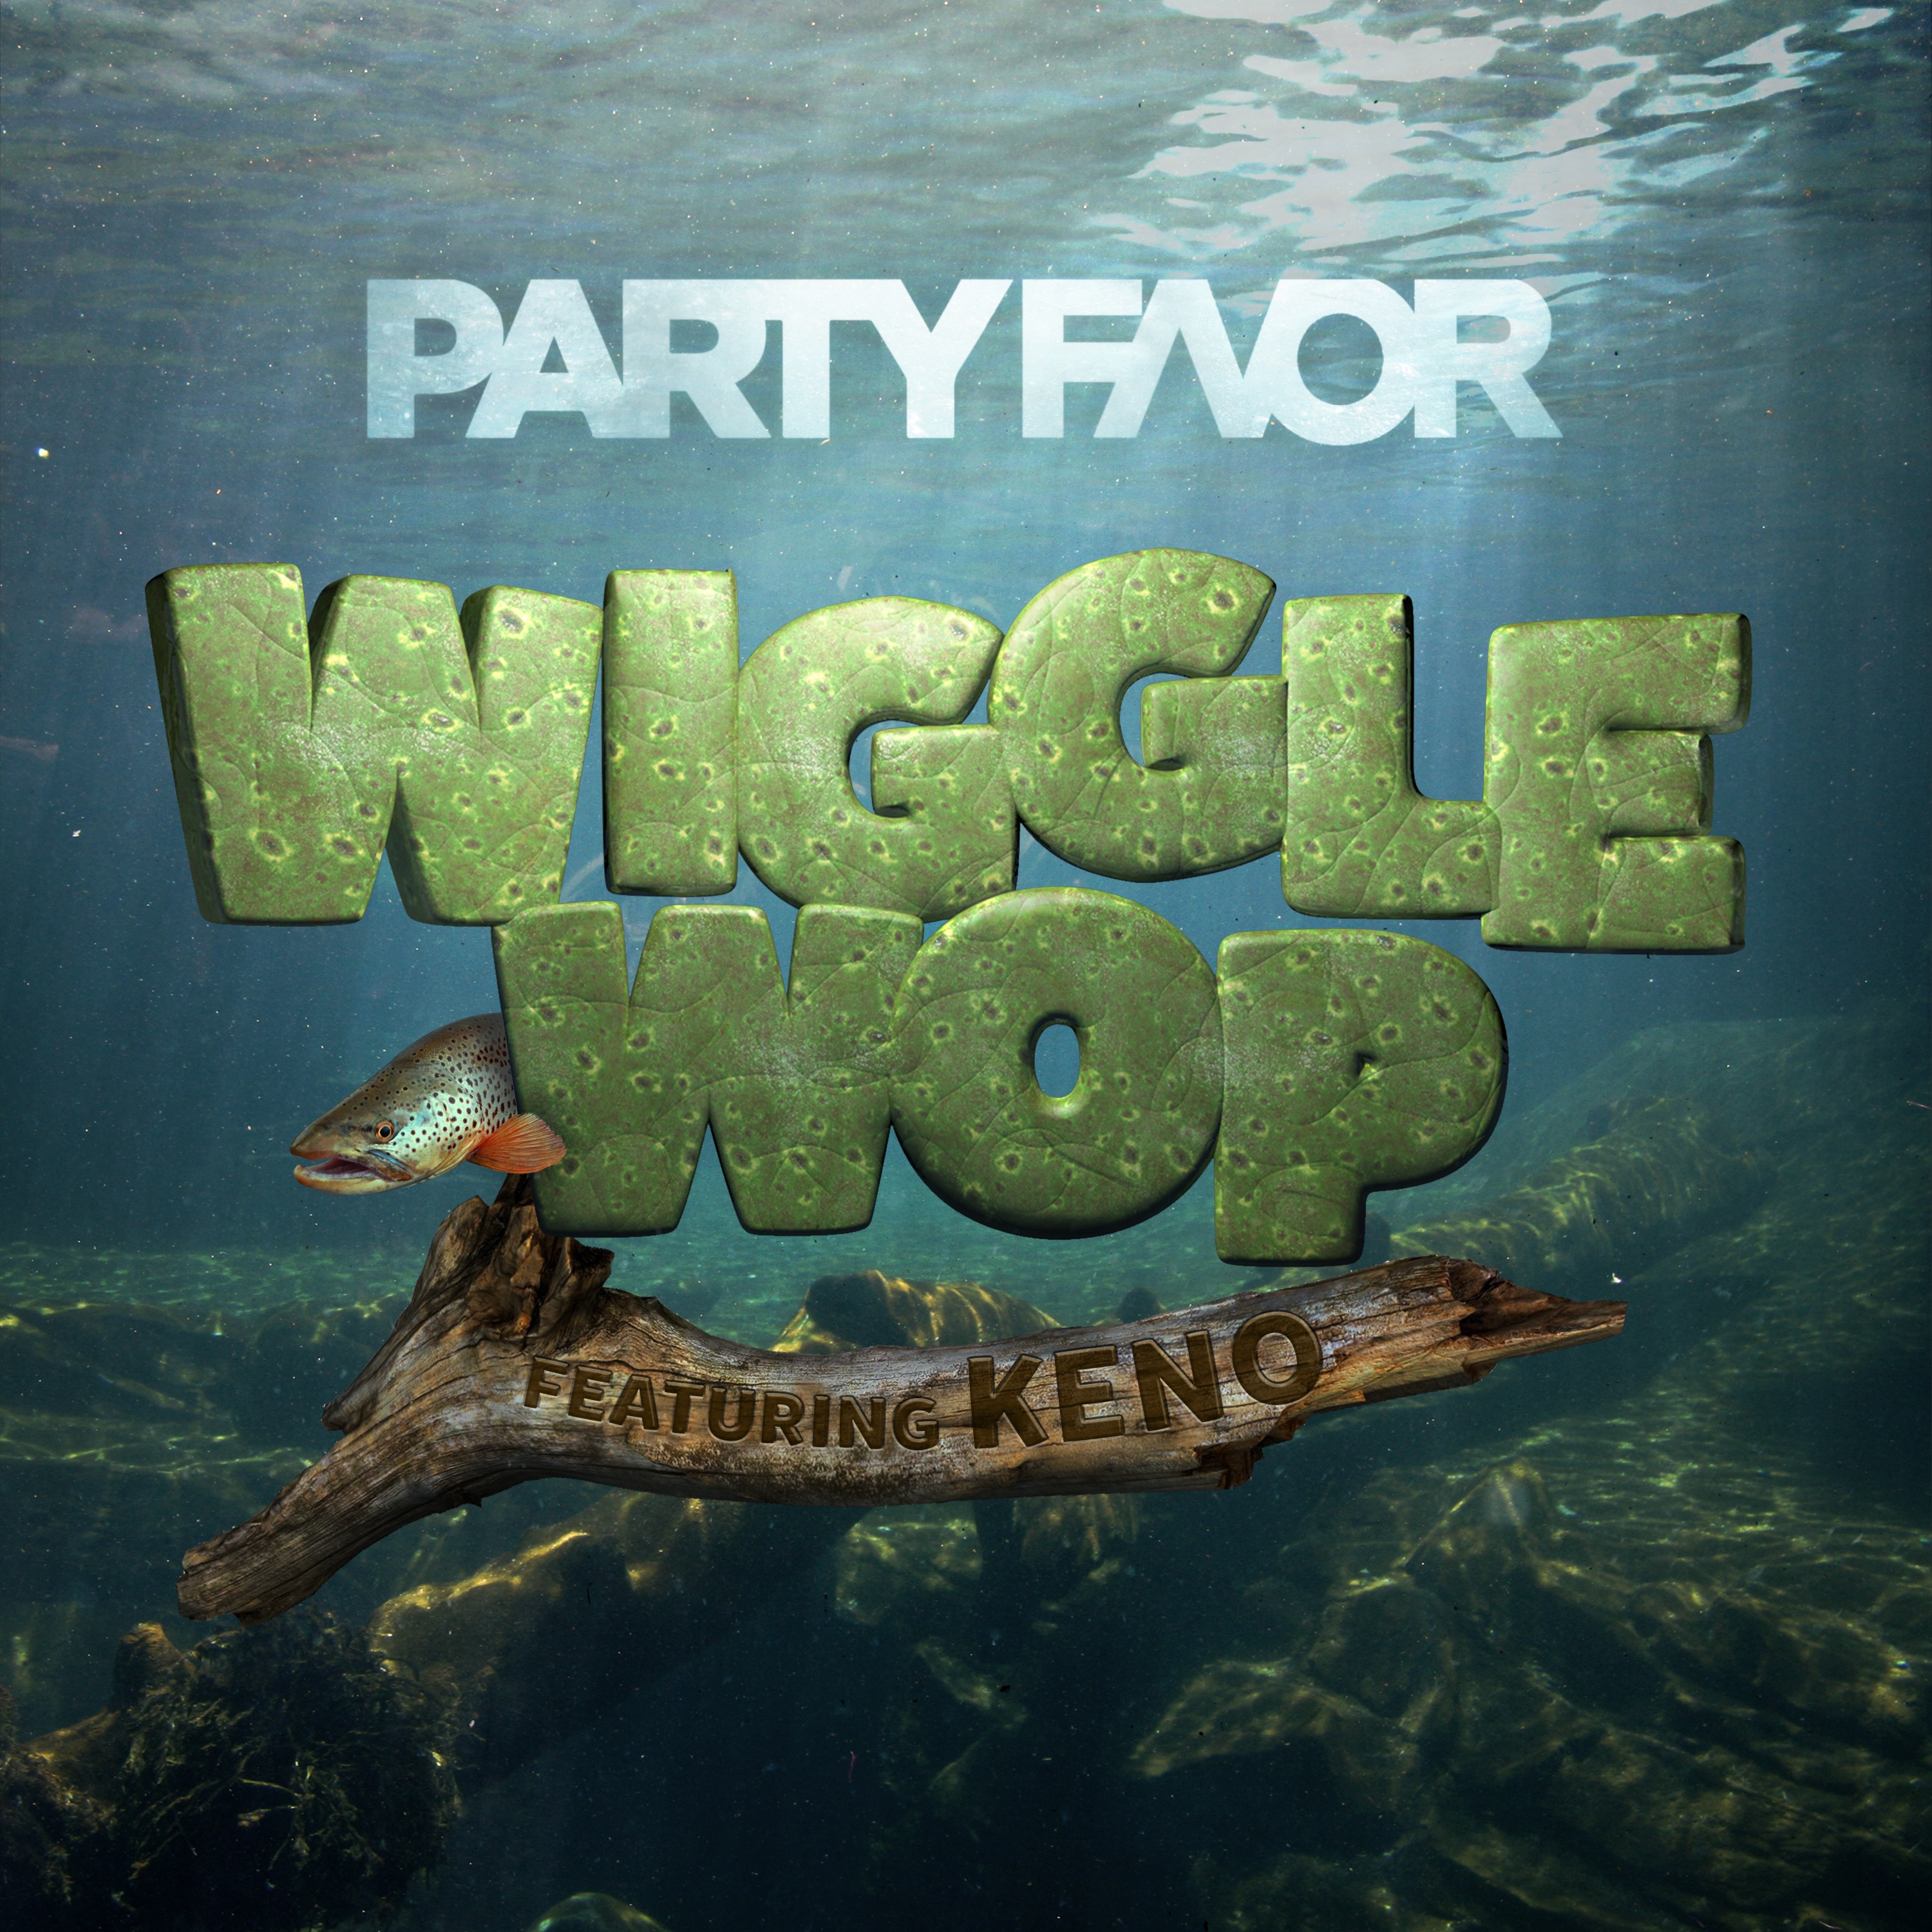 डाउनलोड करा Party Favor - Wiggle Wop (feat. Keno)